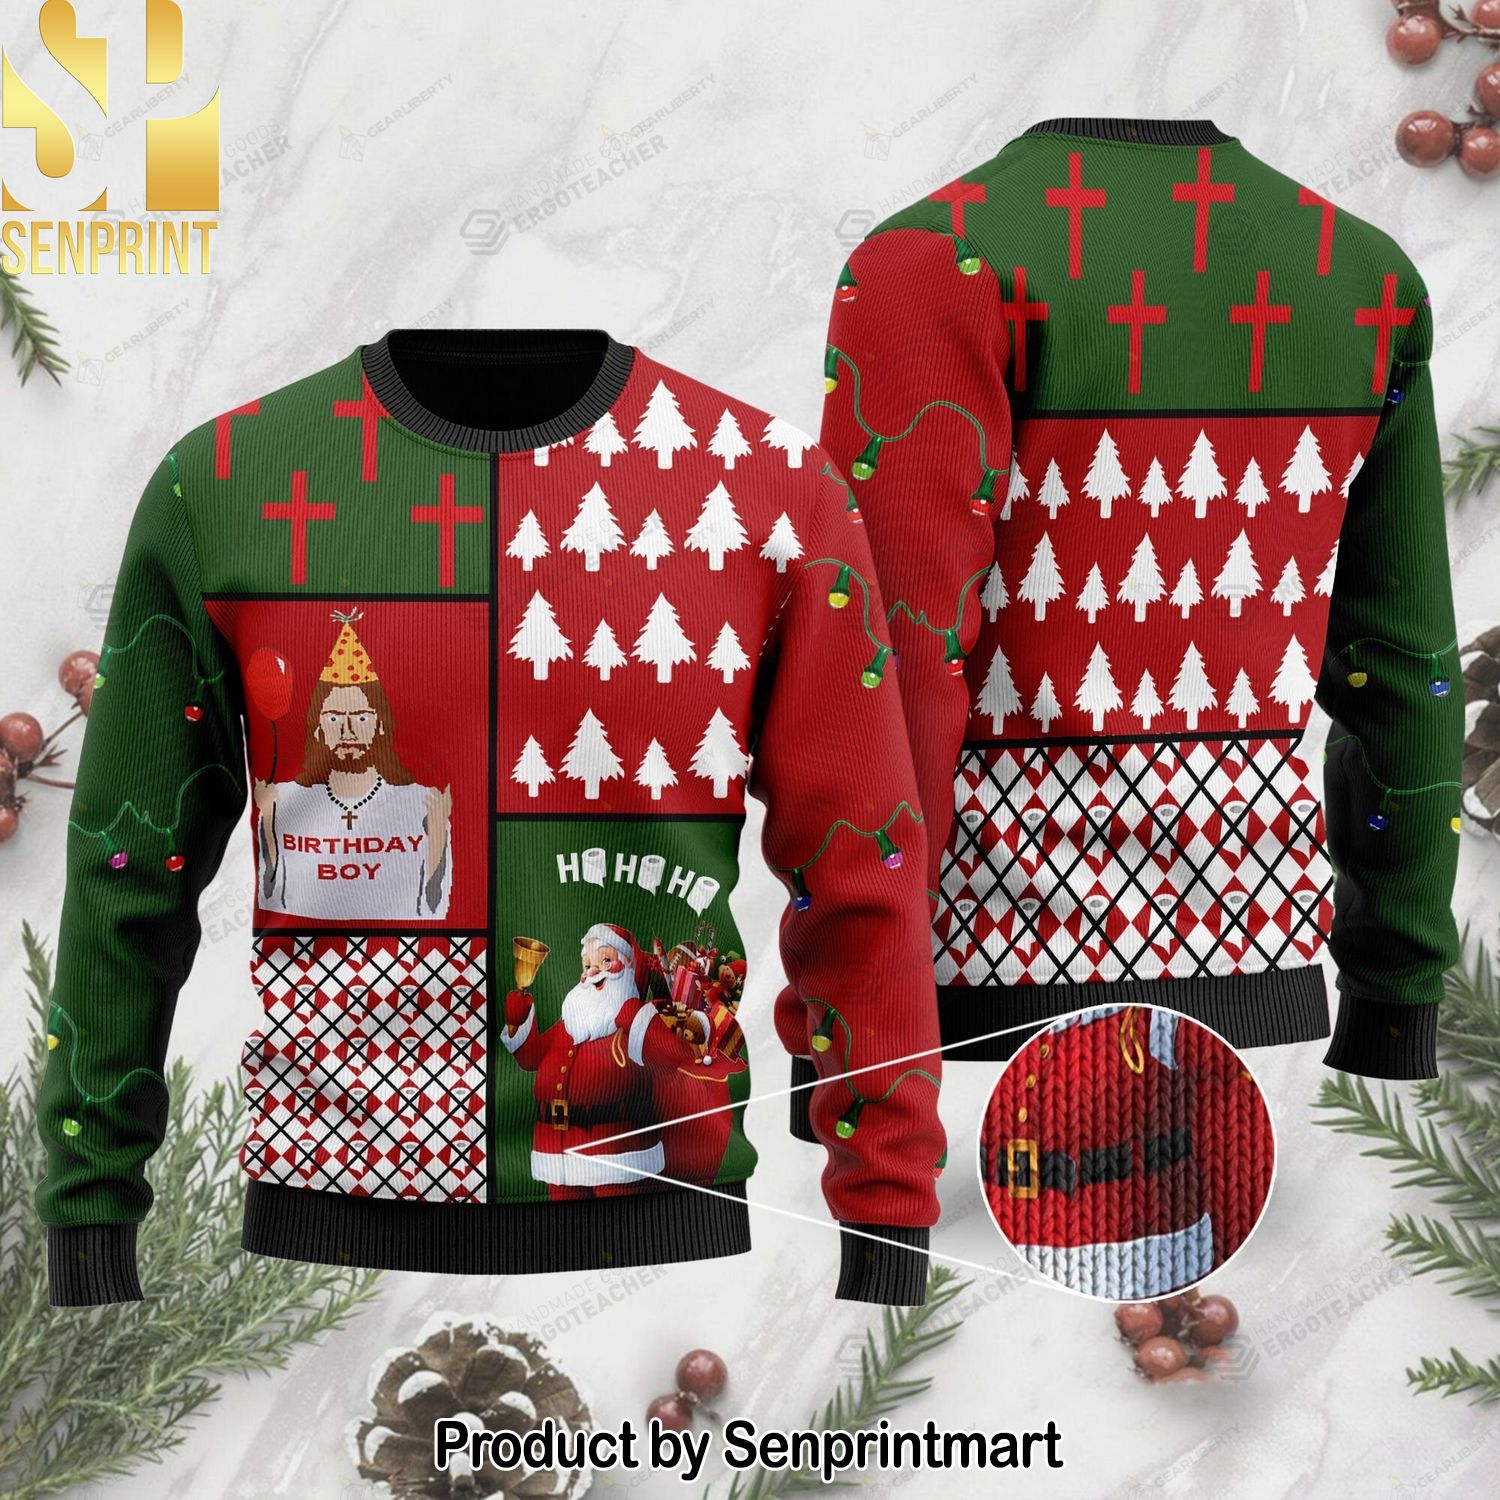 Jesus Birthday Boy And Santa Claus Ho Ho Ho Ugly Christmas Sweater